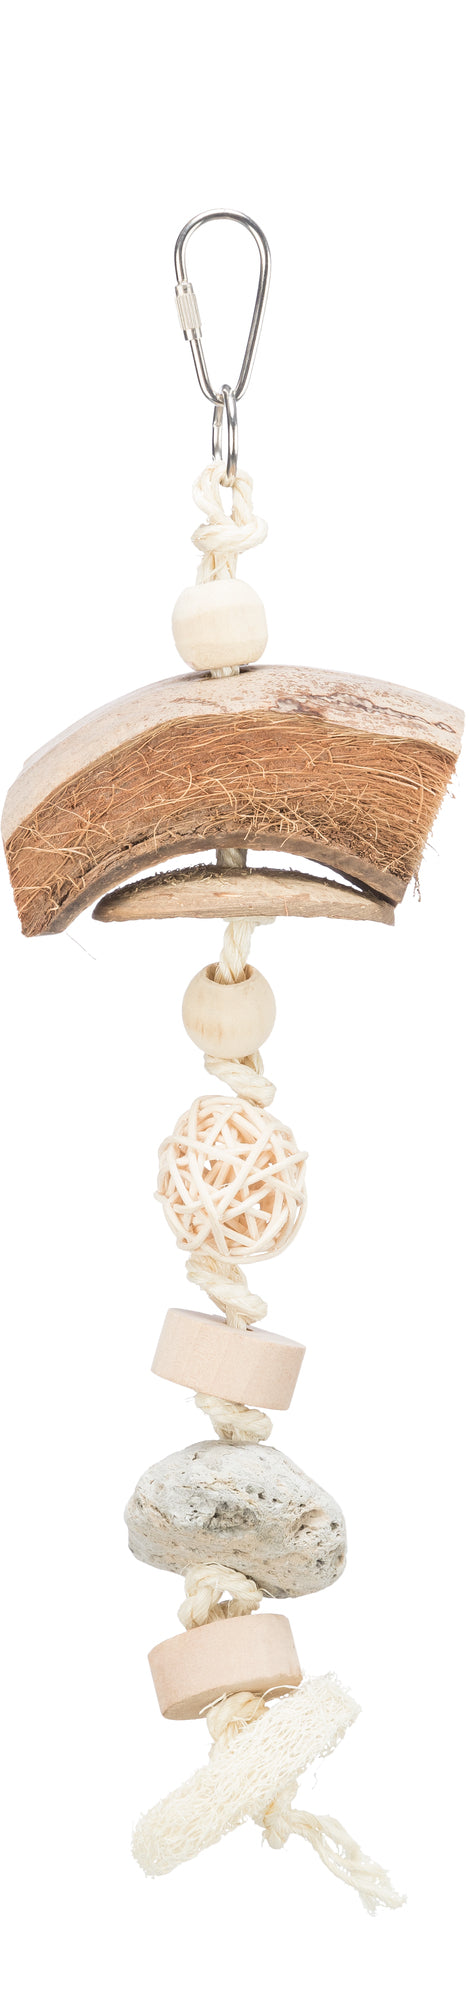 Trixie Natuurspeelgoed voor Grasparkieten Kokosnoot / Rotan / Lavasteen Naturel - Achterkant